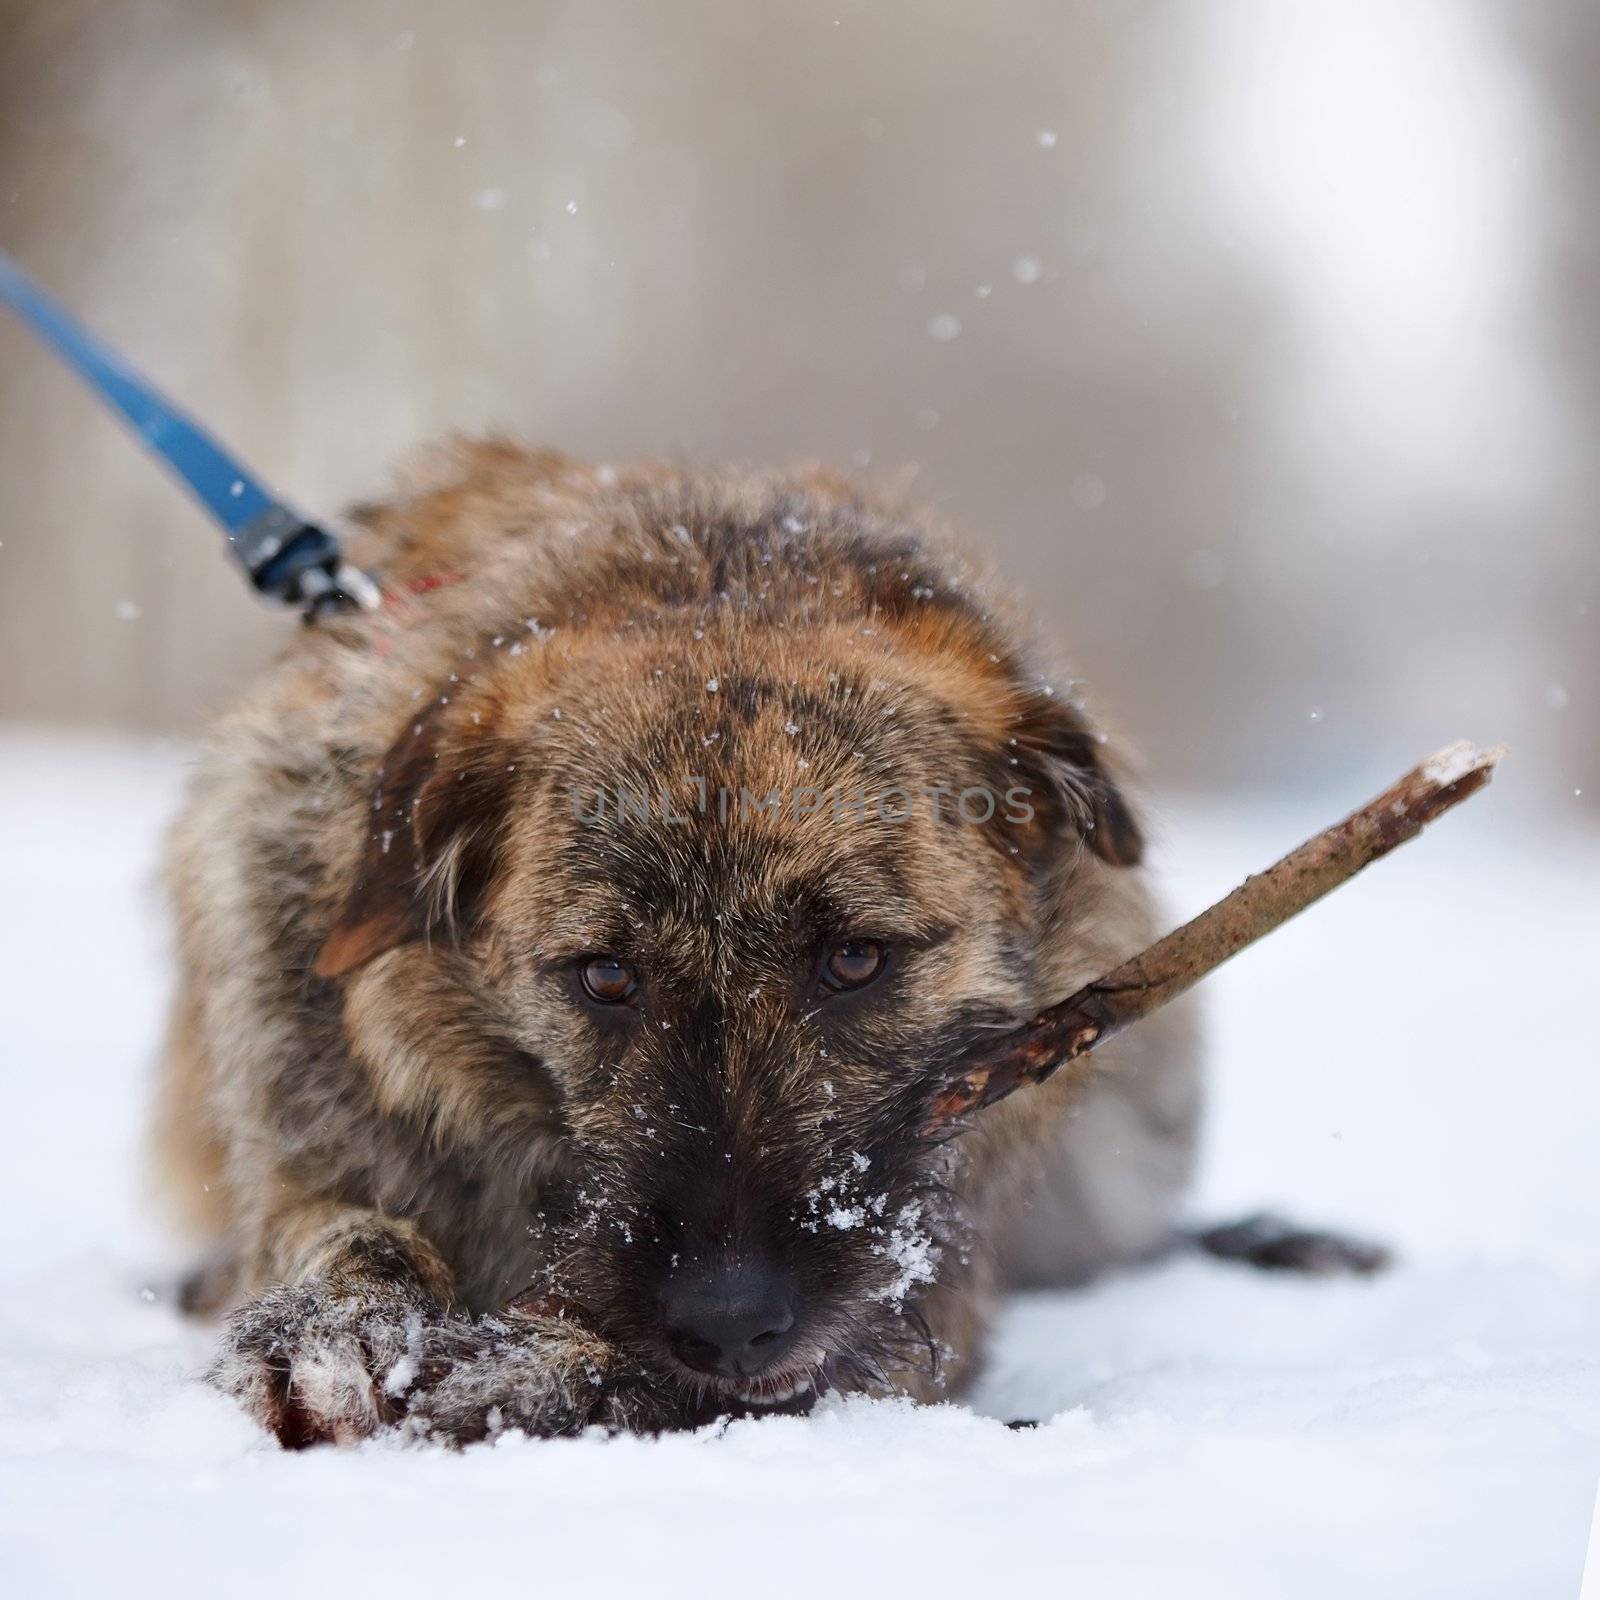 The shaggy mongrel gnaws a stick. Dog on snow.